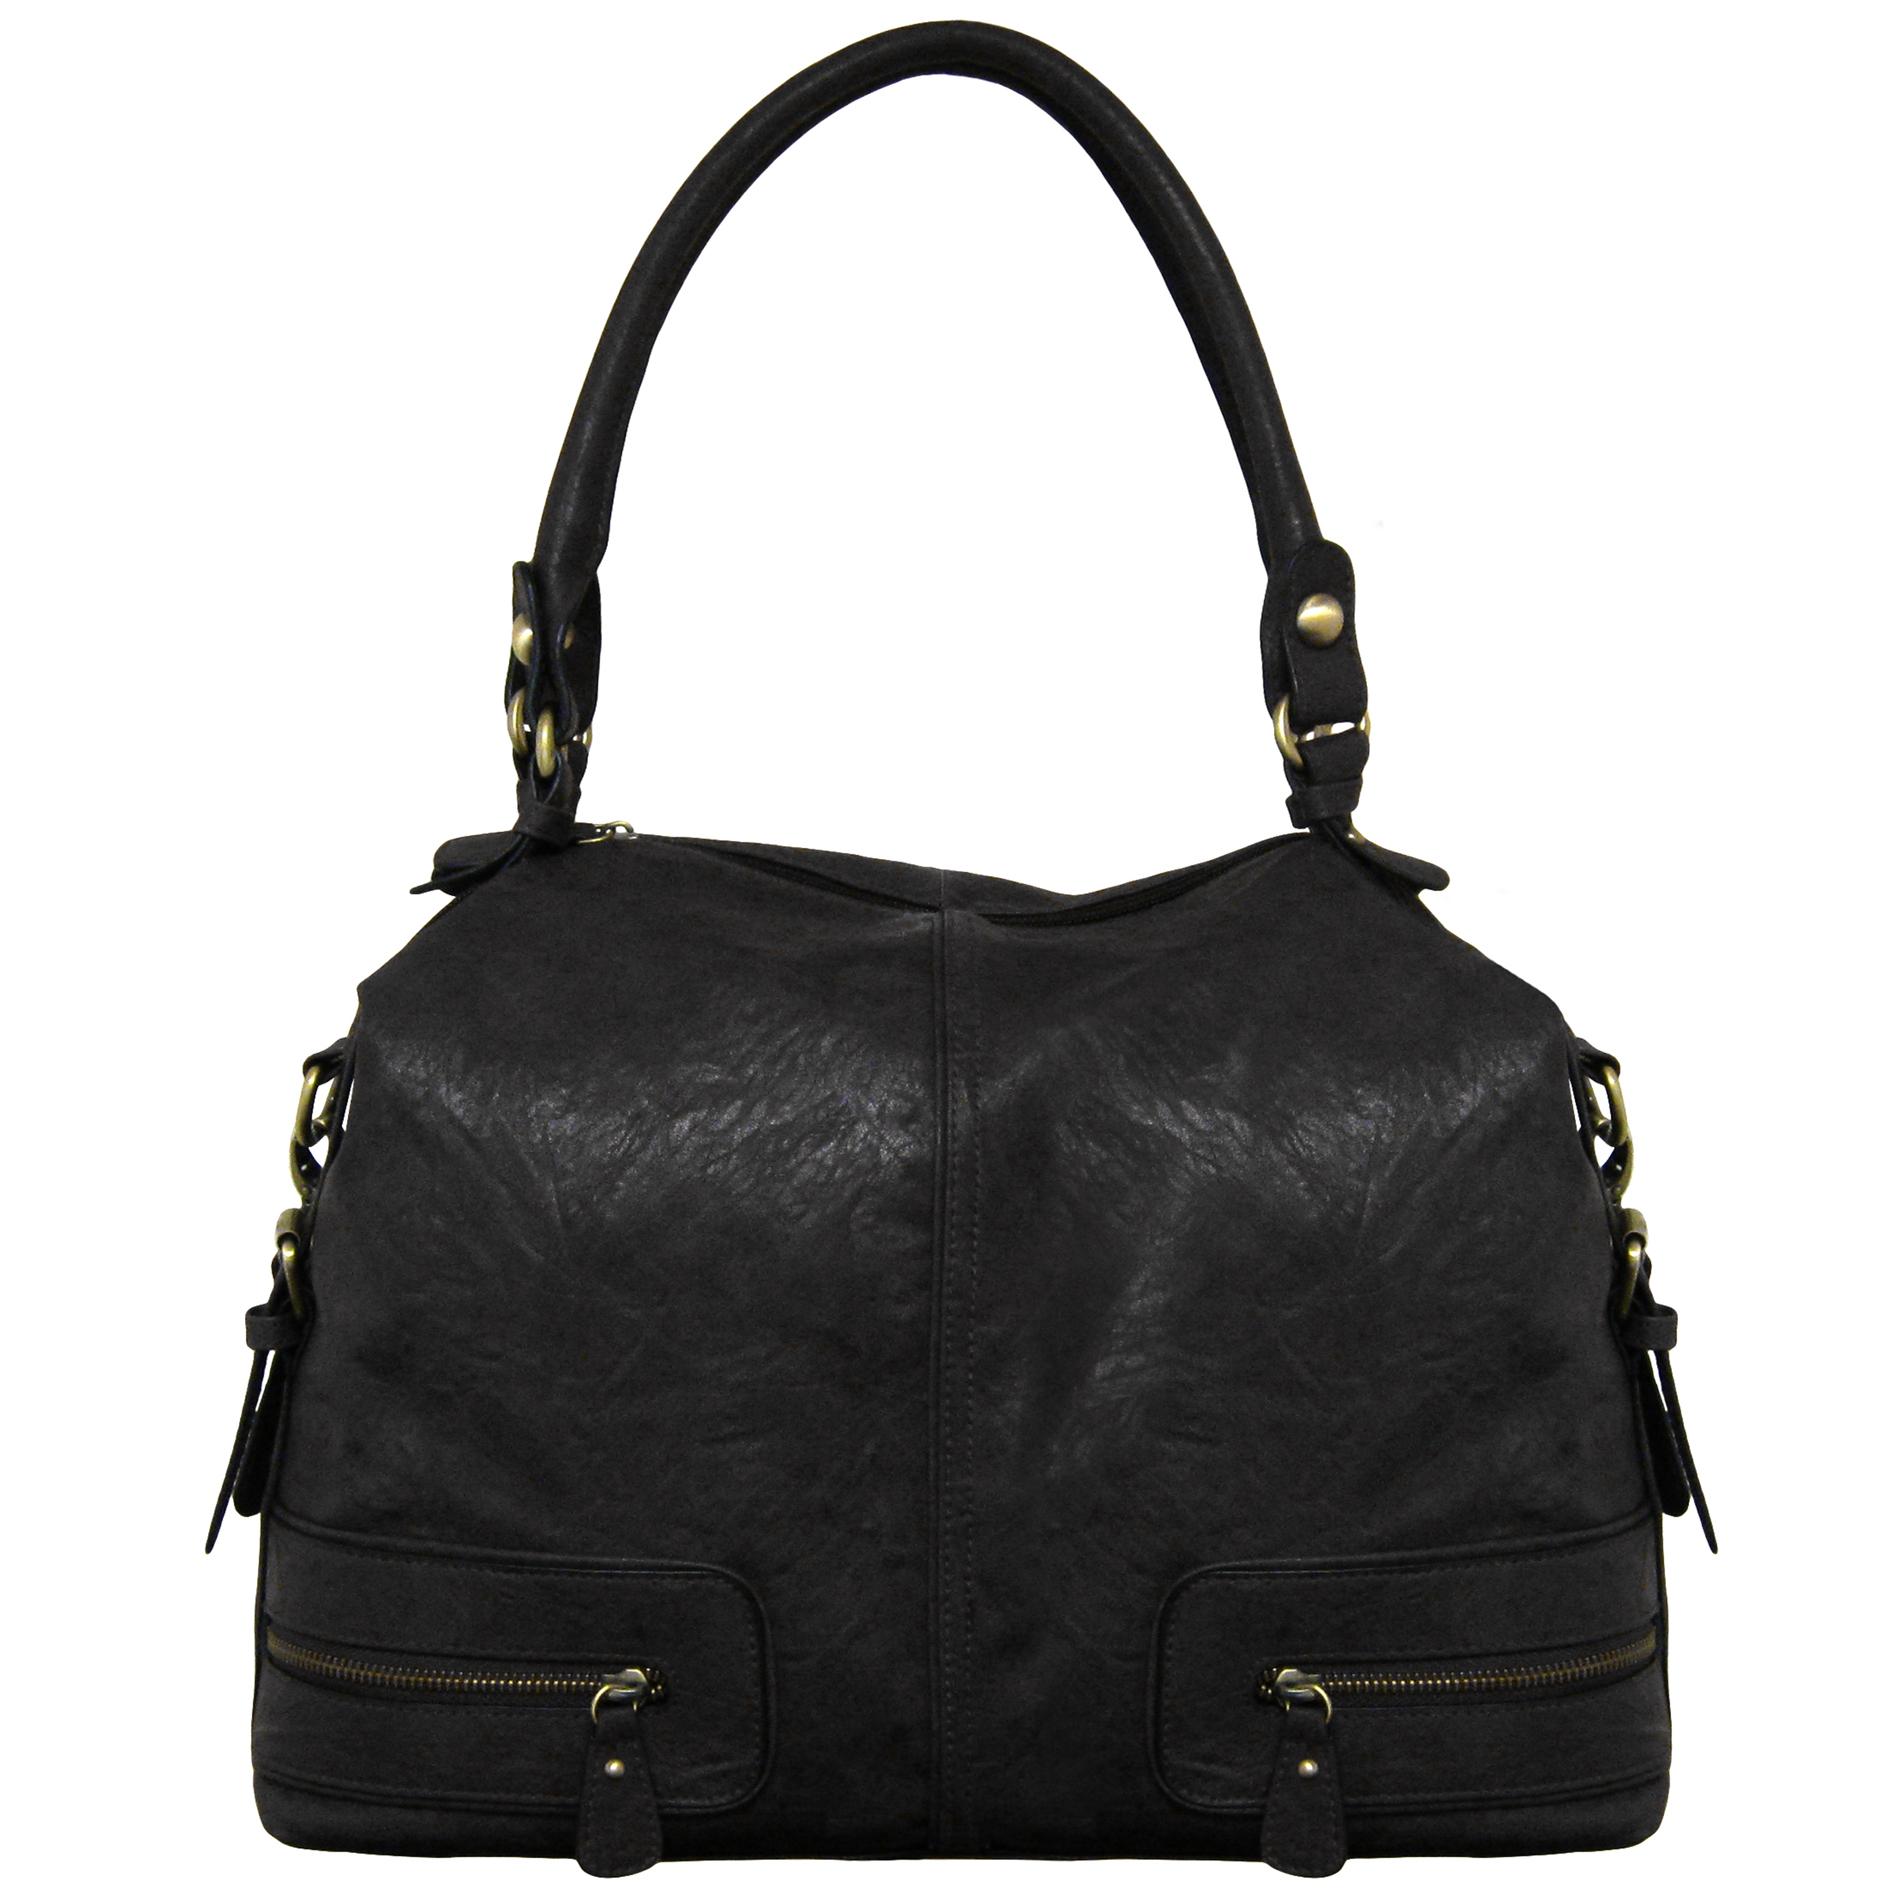 Covington Women's Satchel Handbag